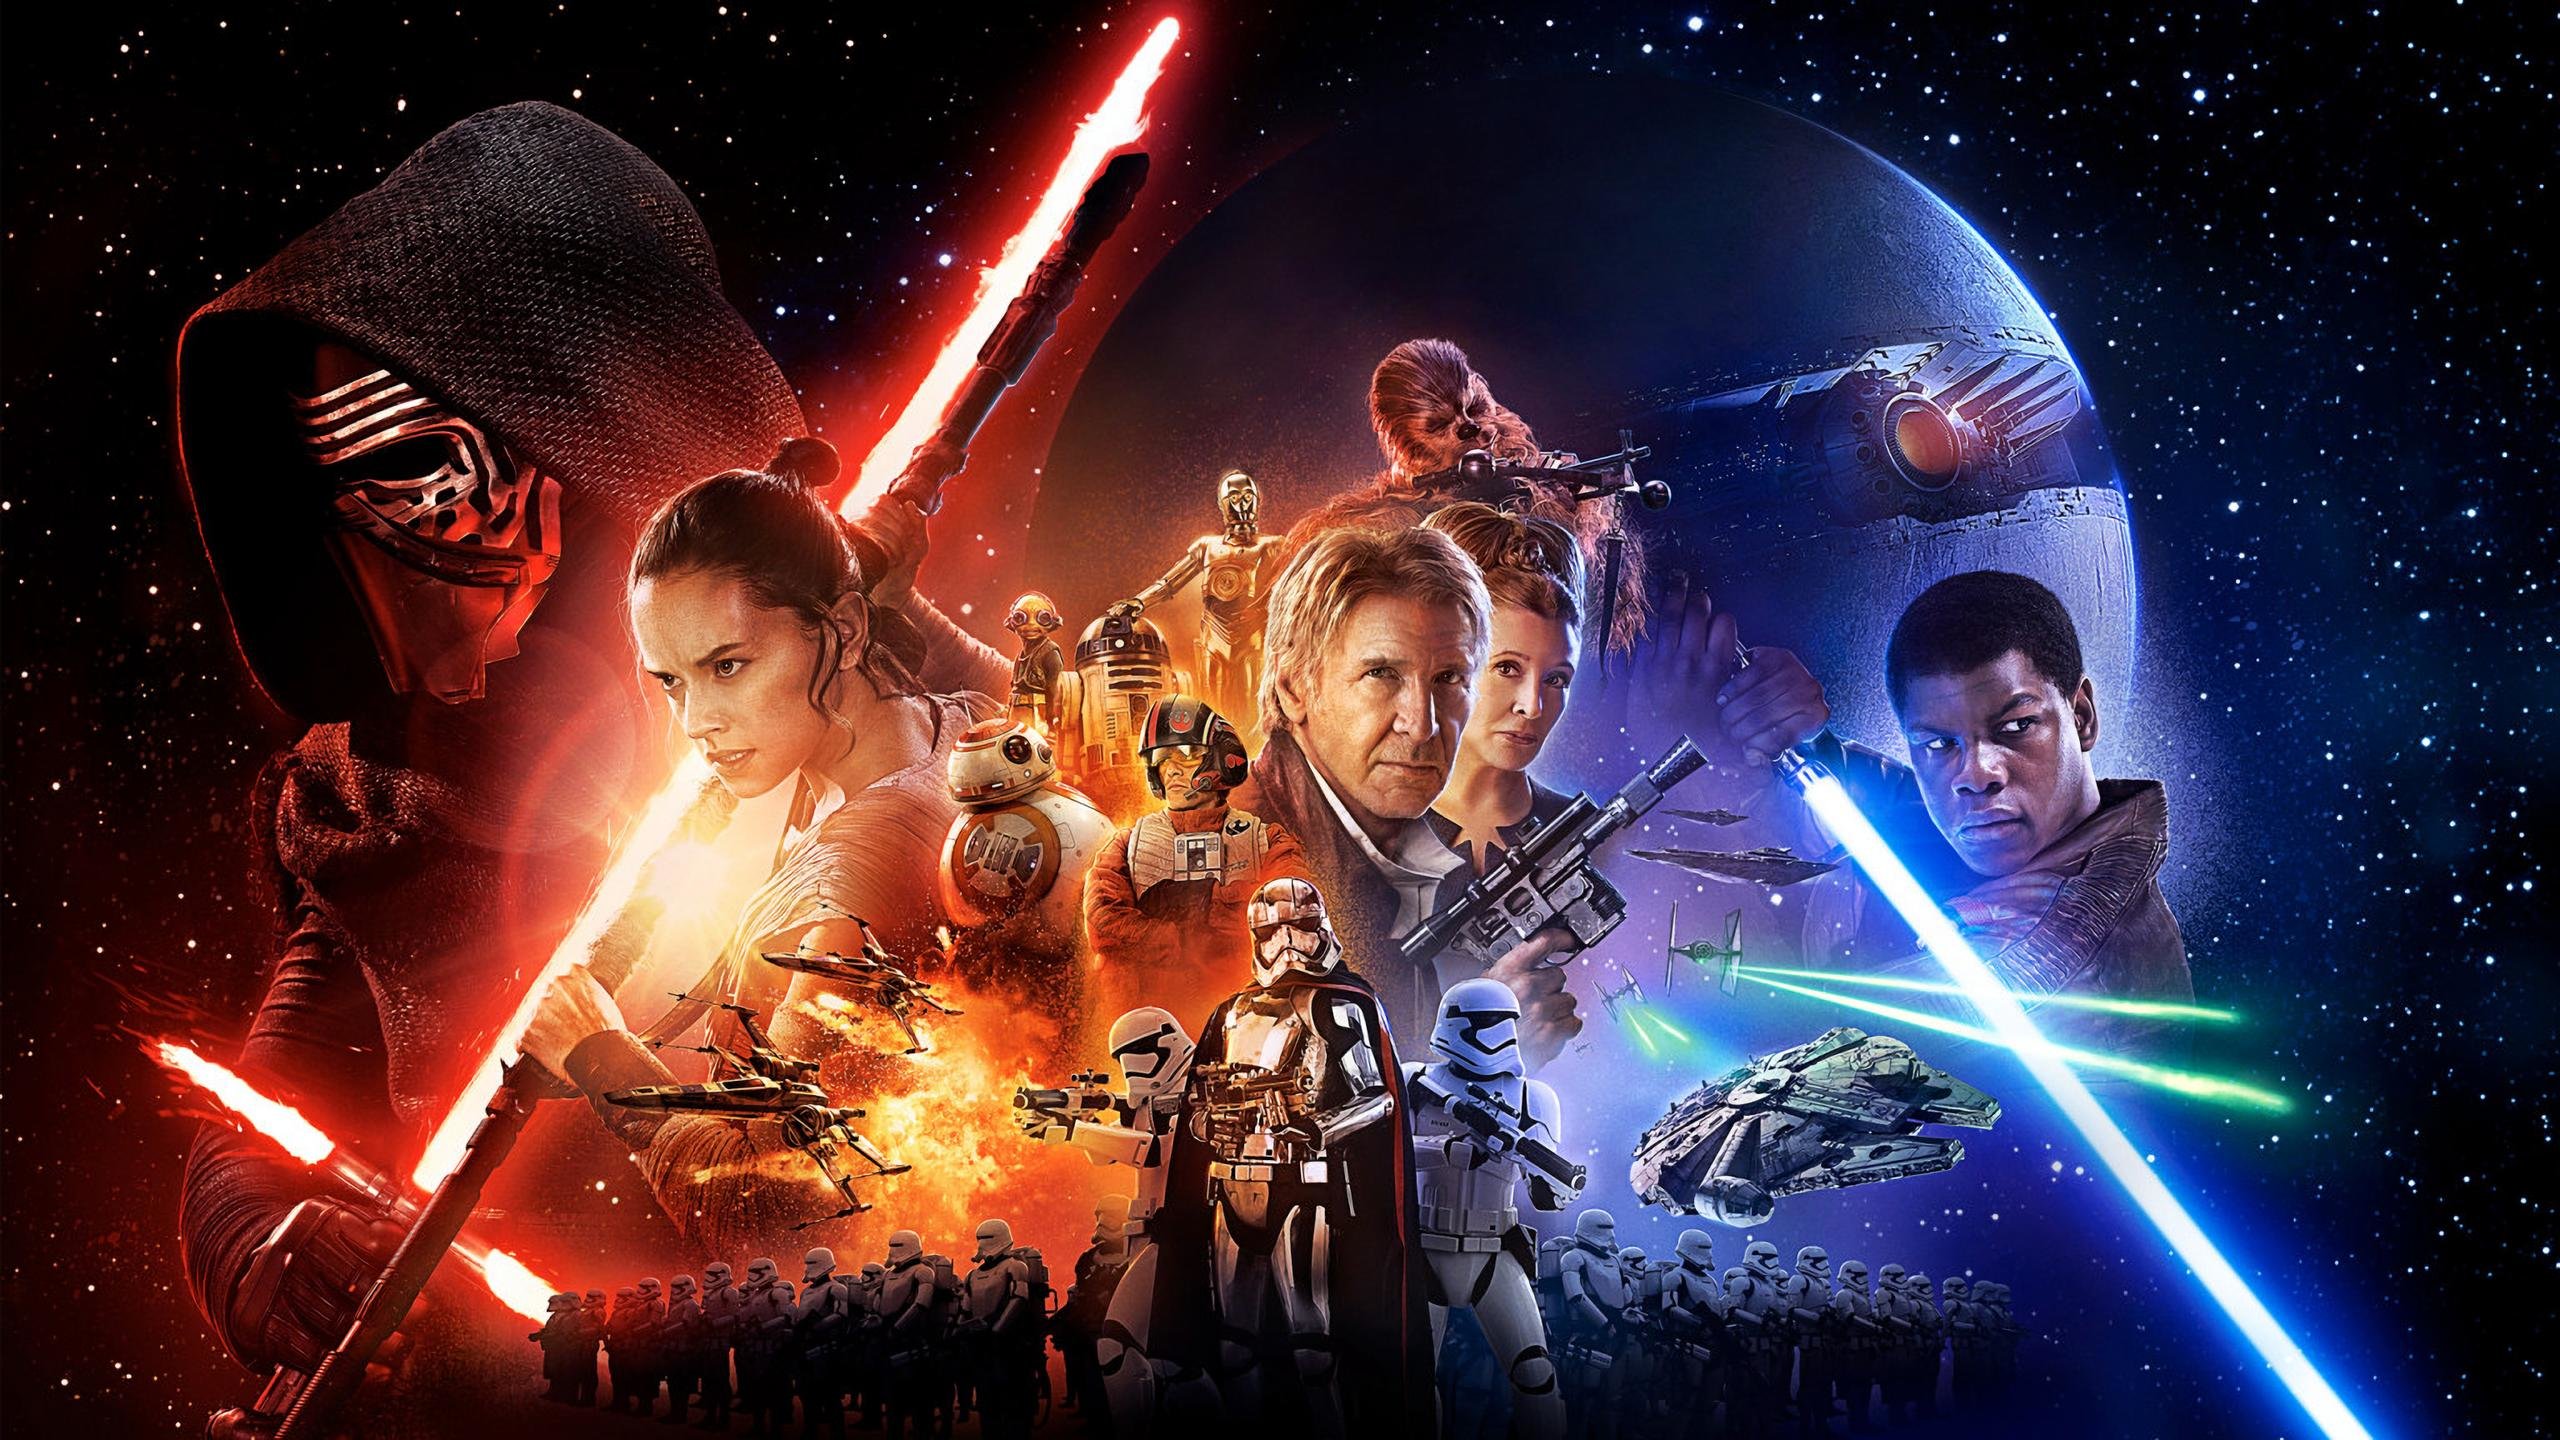 Star Wars wallpaper 2560x1440 desktop background